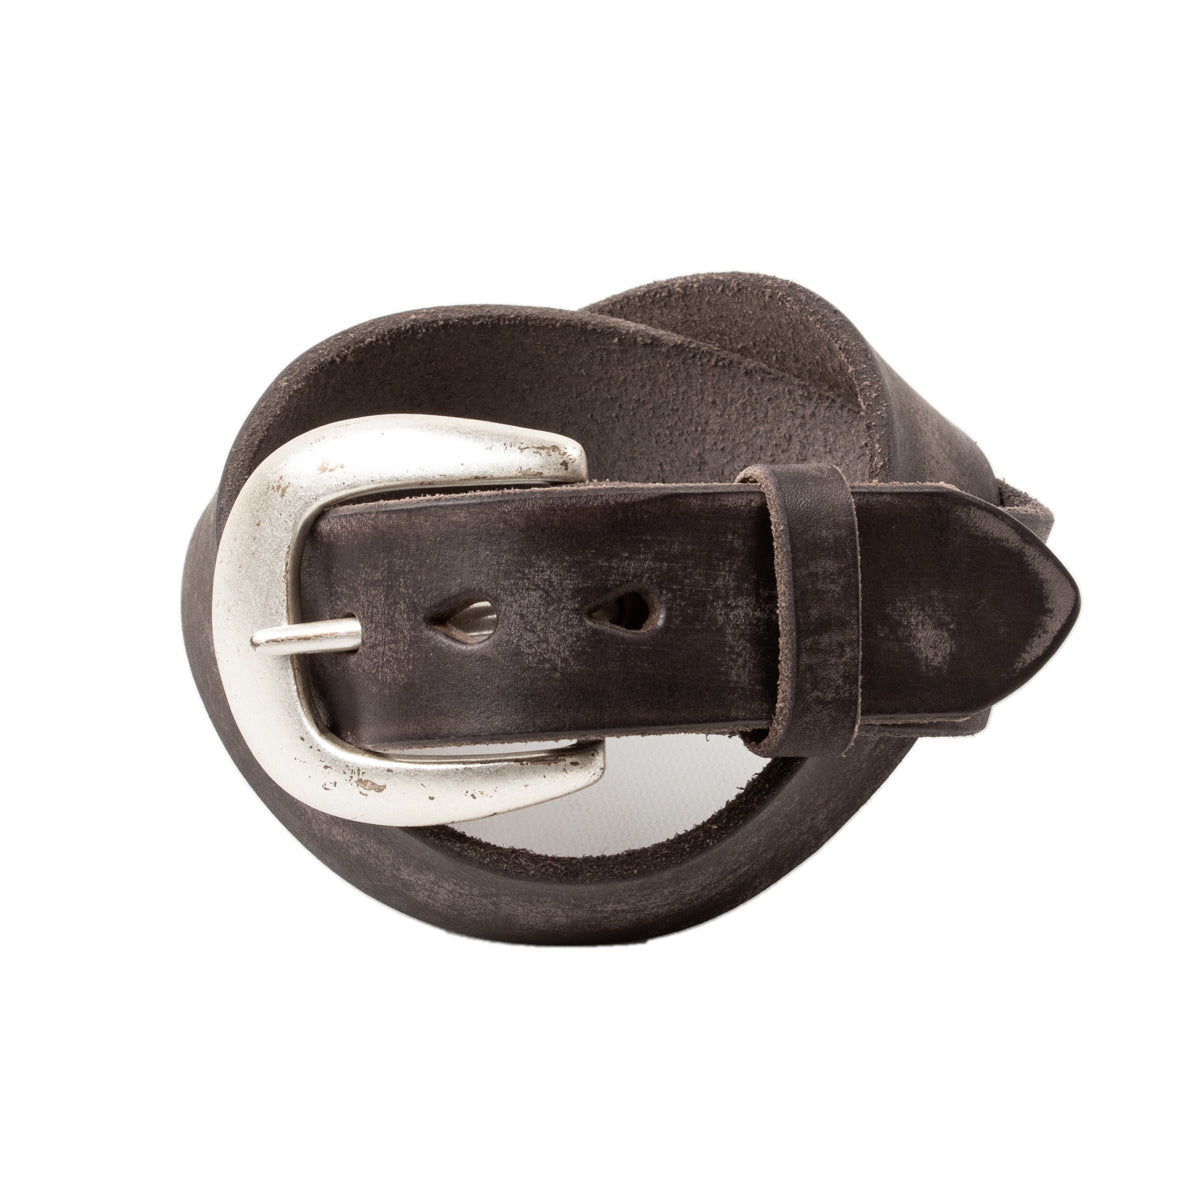 Fullcount Wild Leather Garrison Belt - Black – Standard